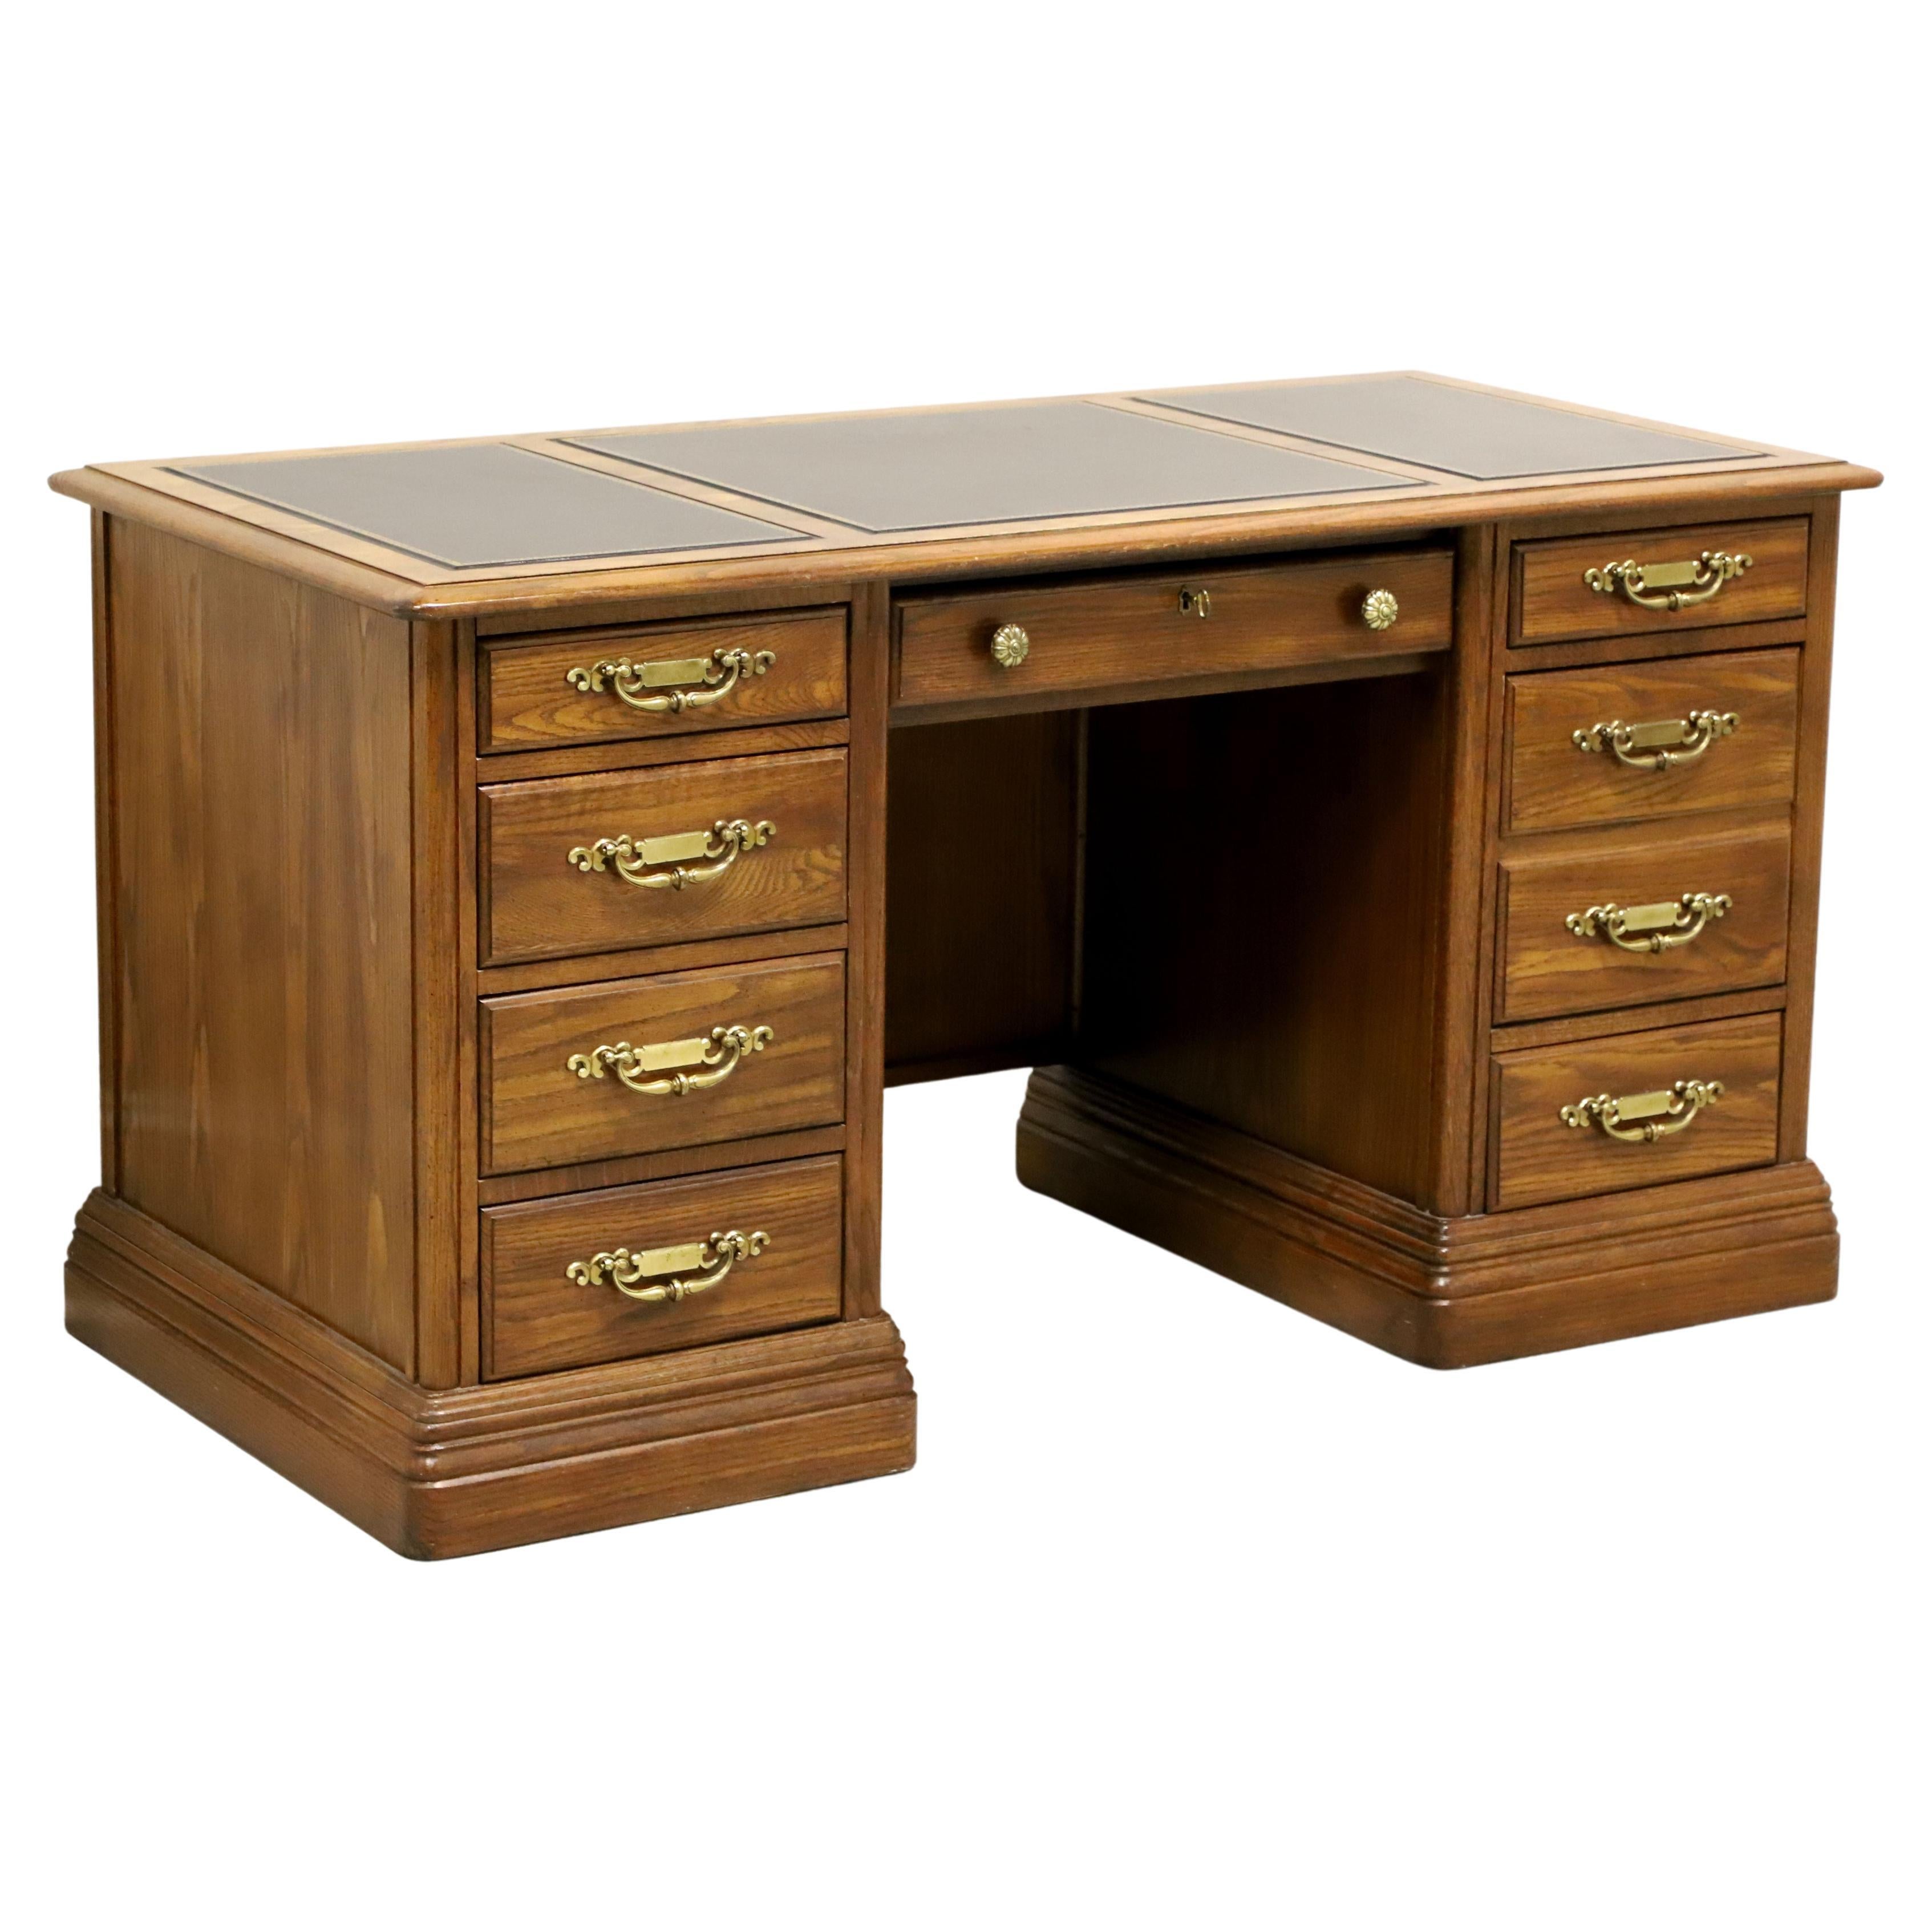 JASPER CABINET Americana Oak Leather Top Traditional Executive Desk For Sale